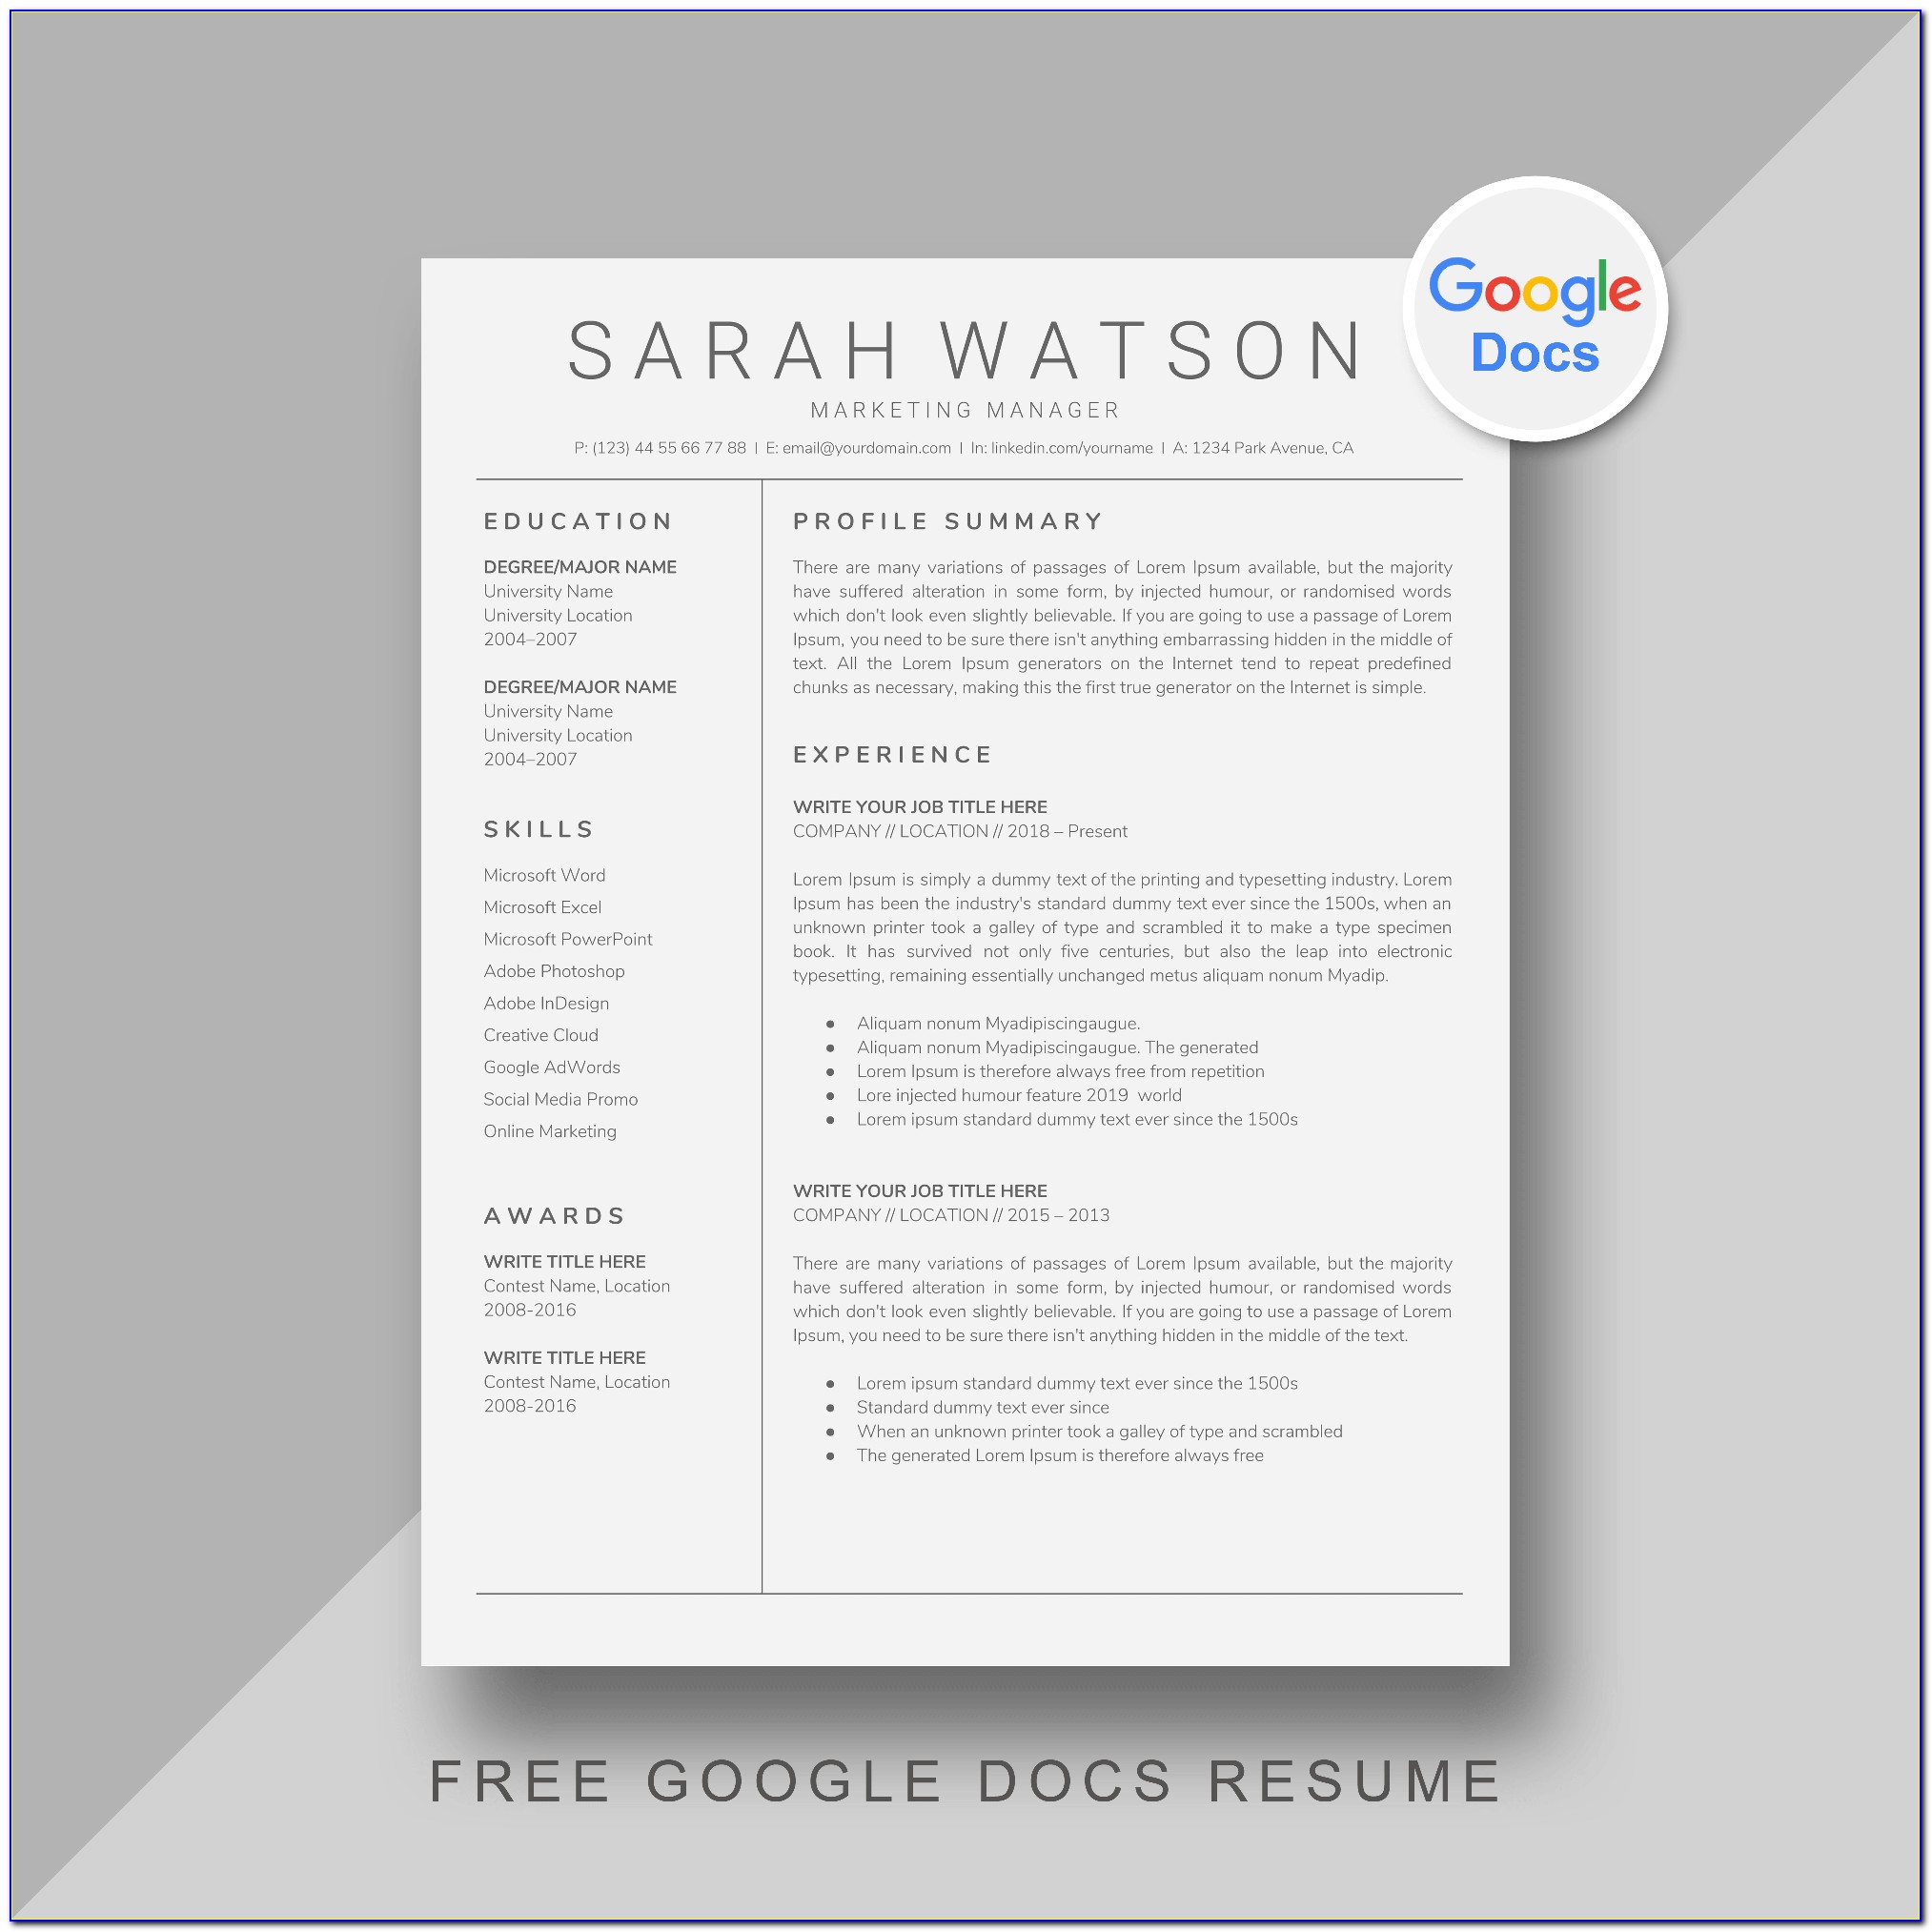 Free Google Resume Templates 2020